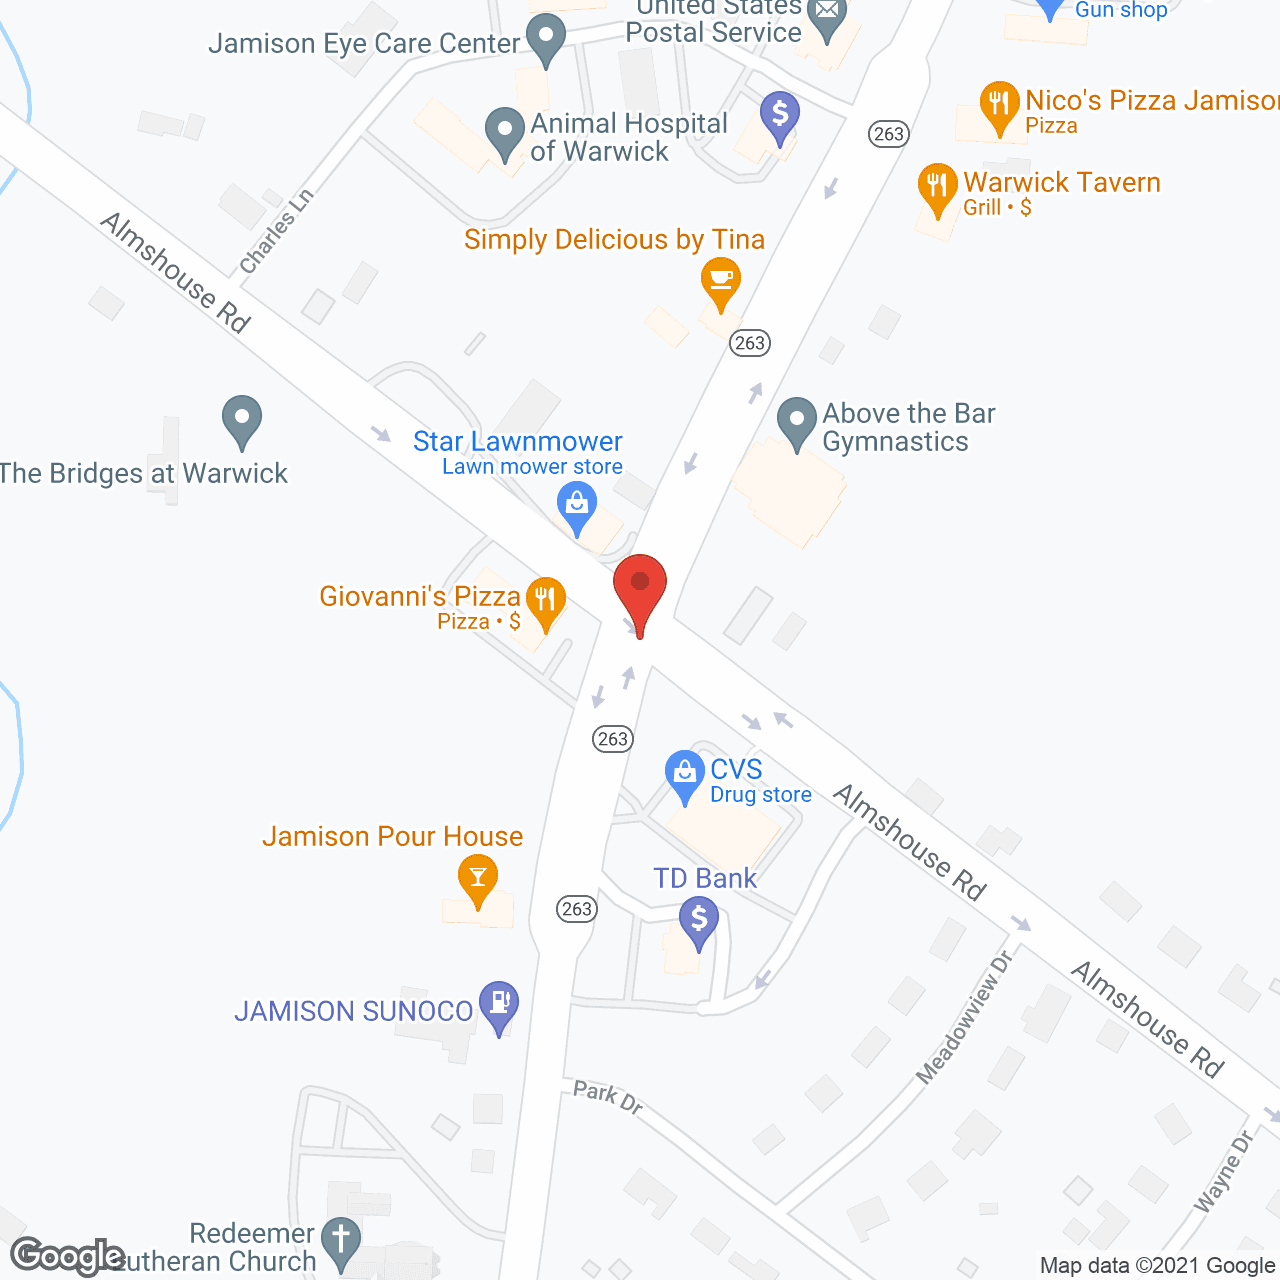 Bridges of Warwick in google map